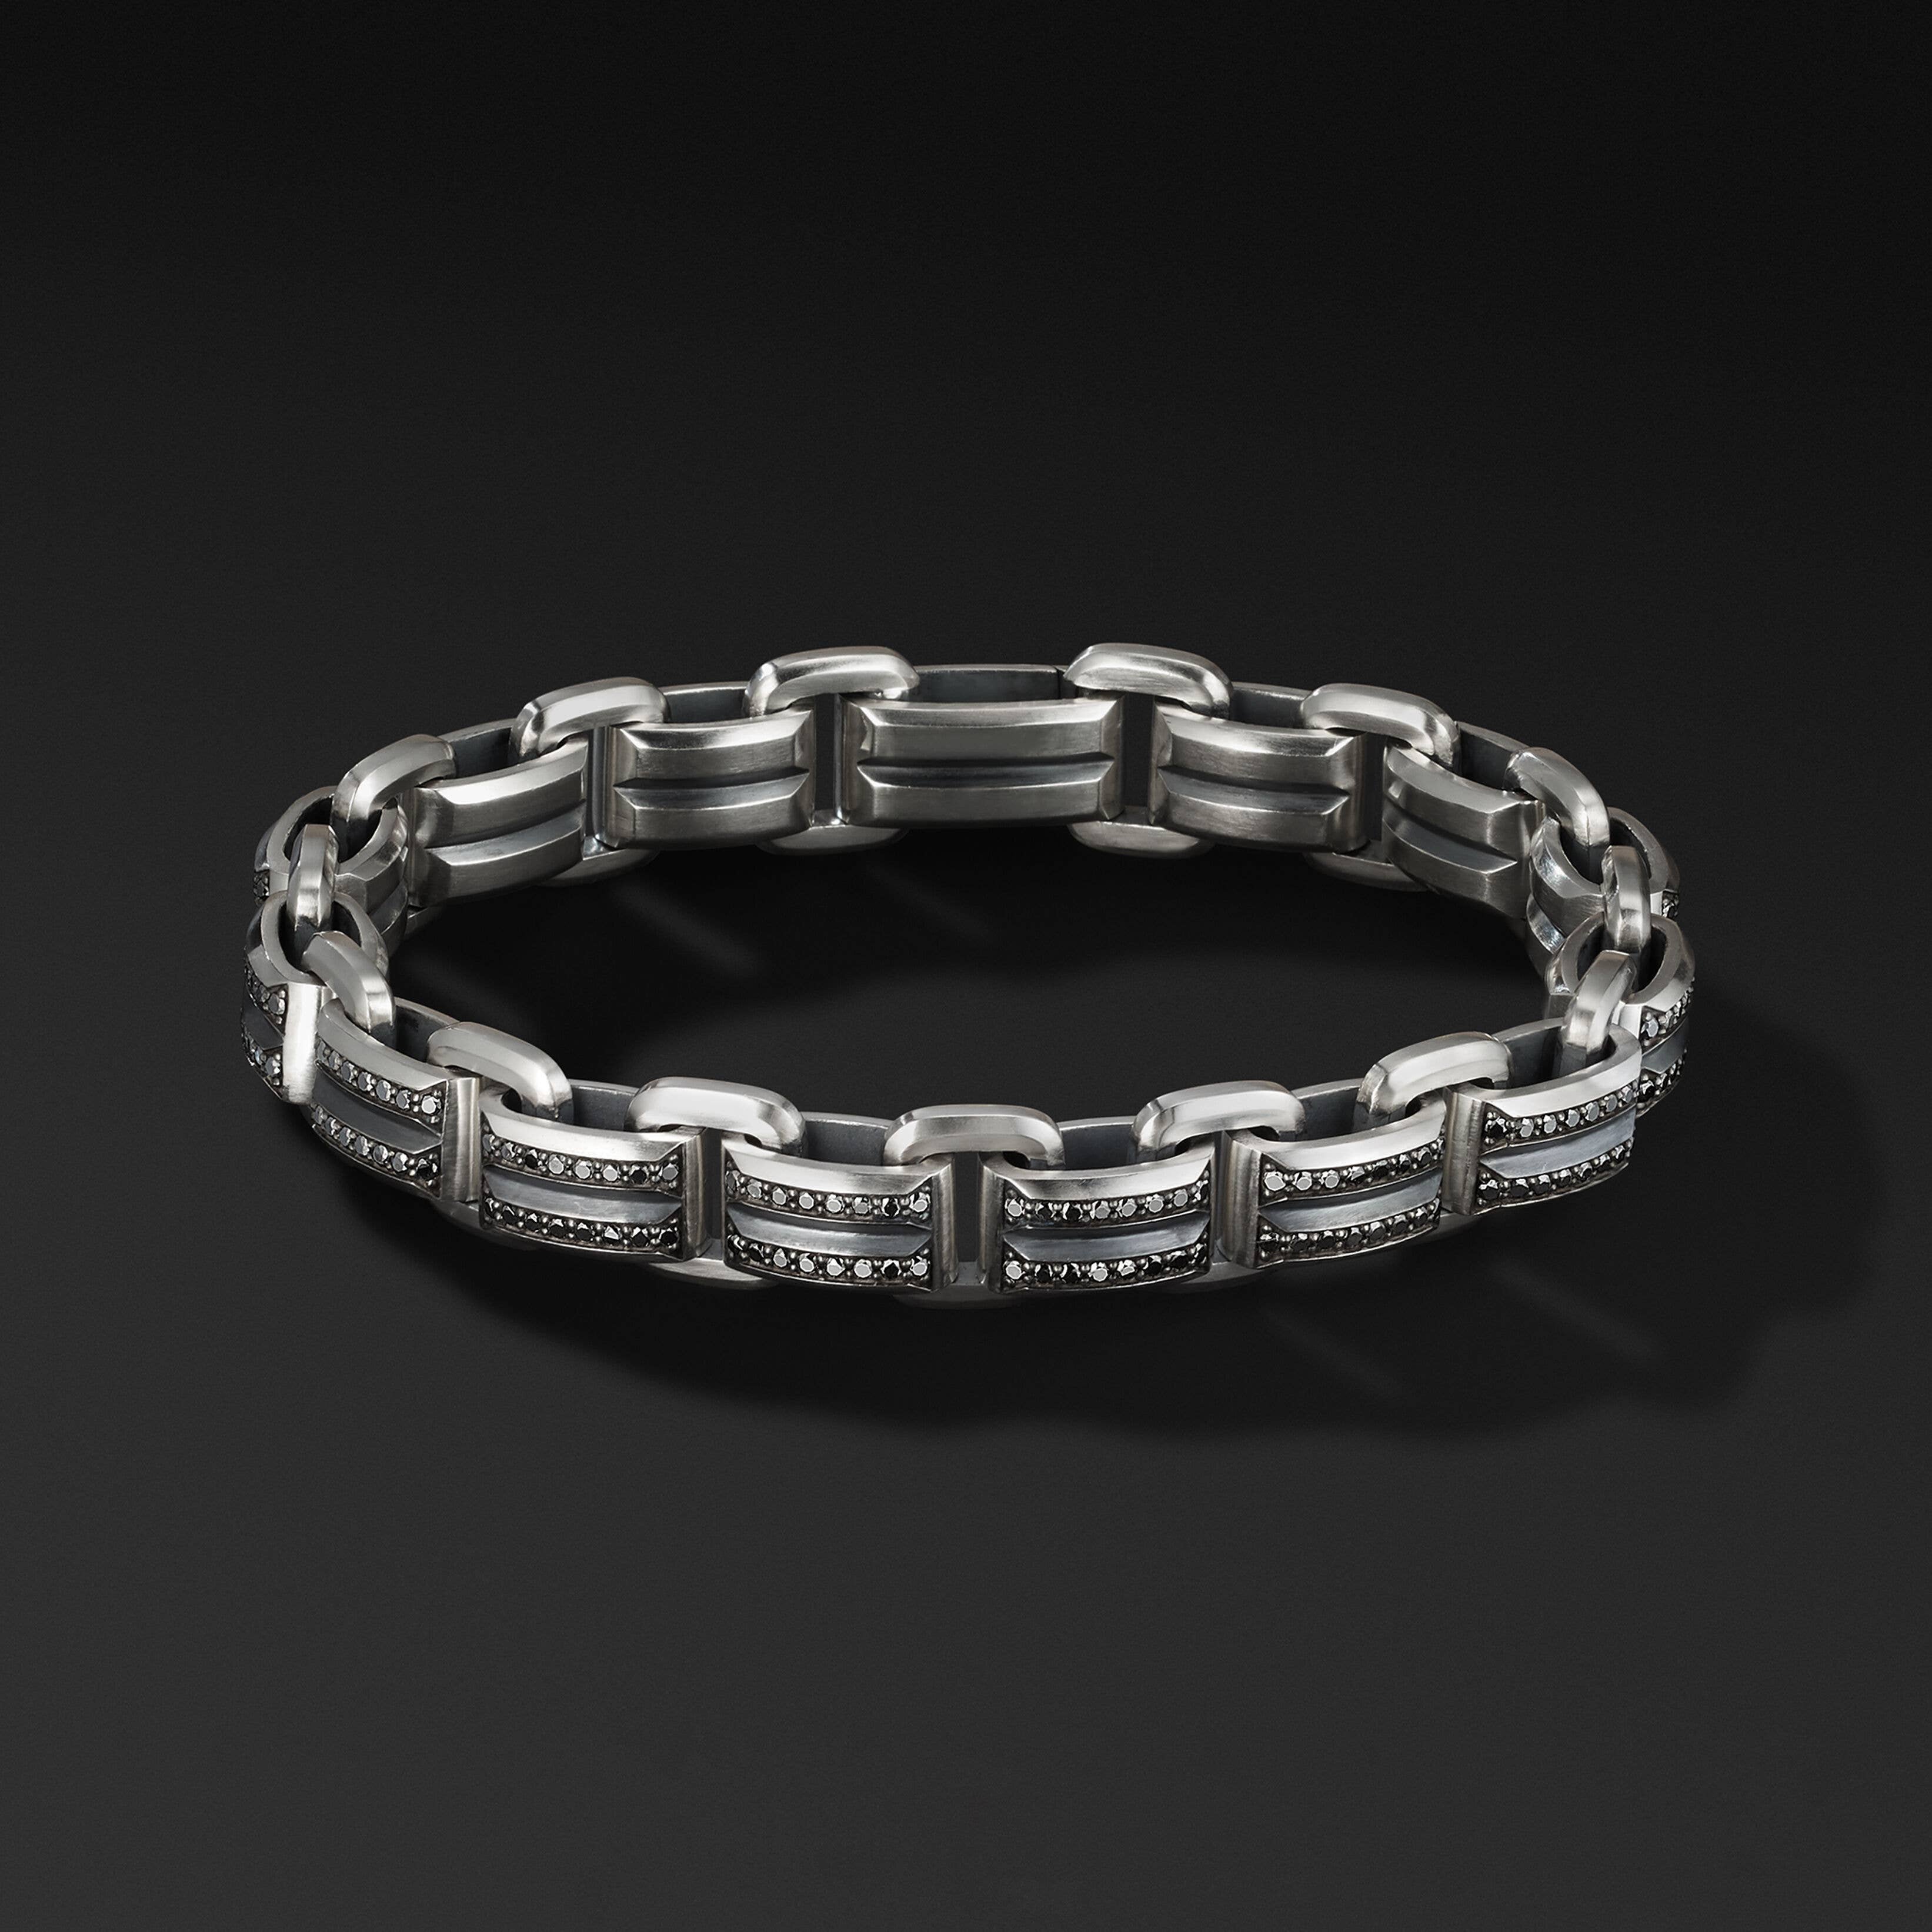 Deco Beveled Link Bracelet in Sterling Silver with Pavé Black Diamonds